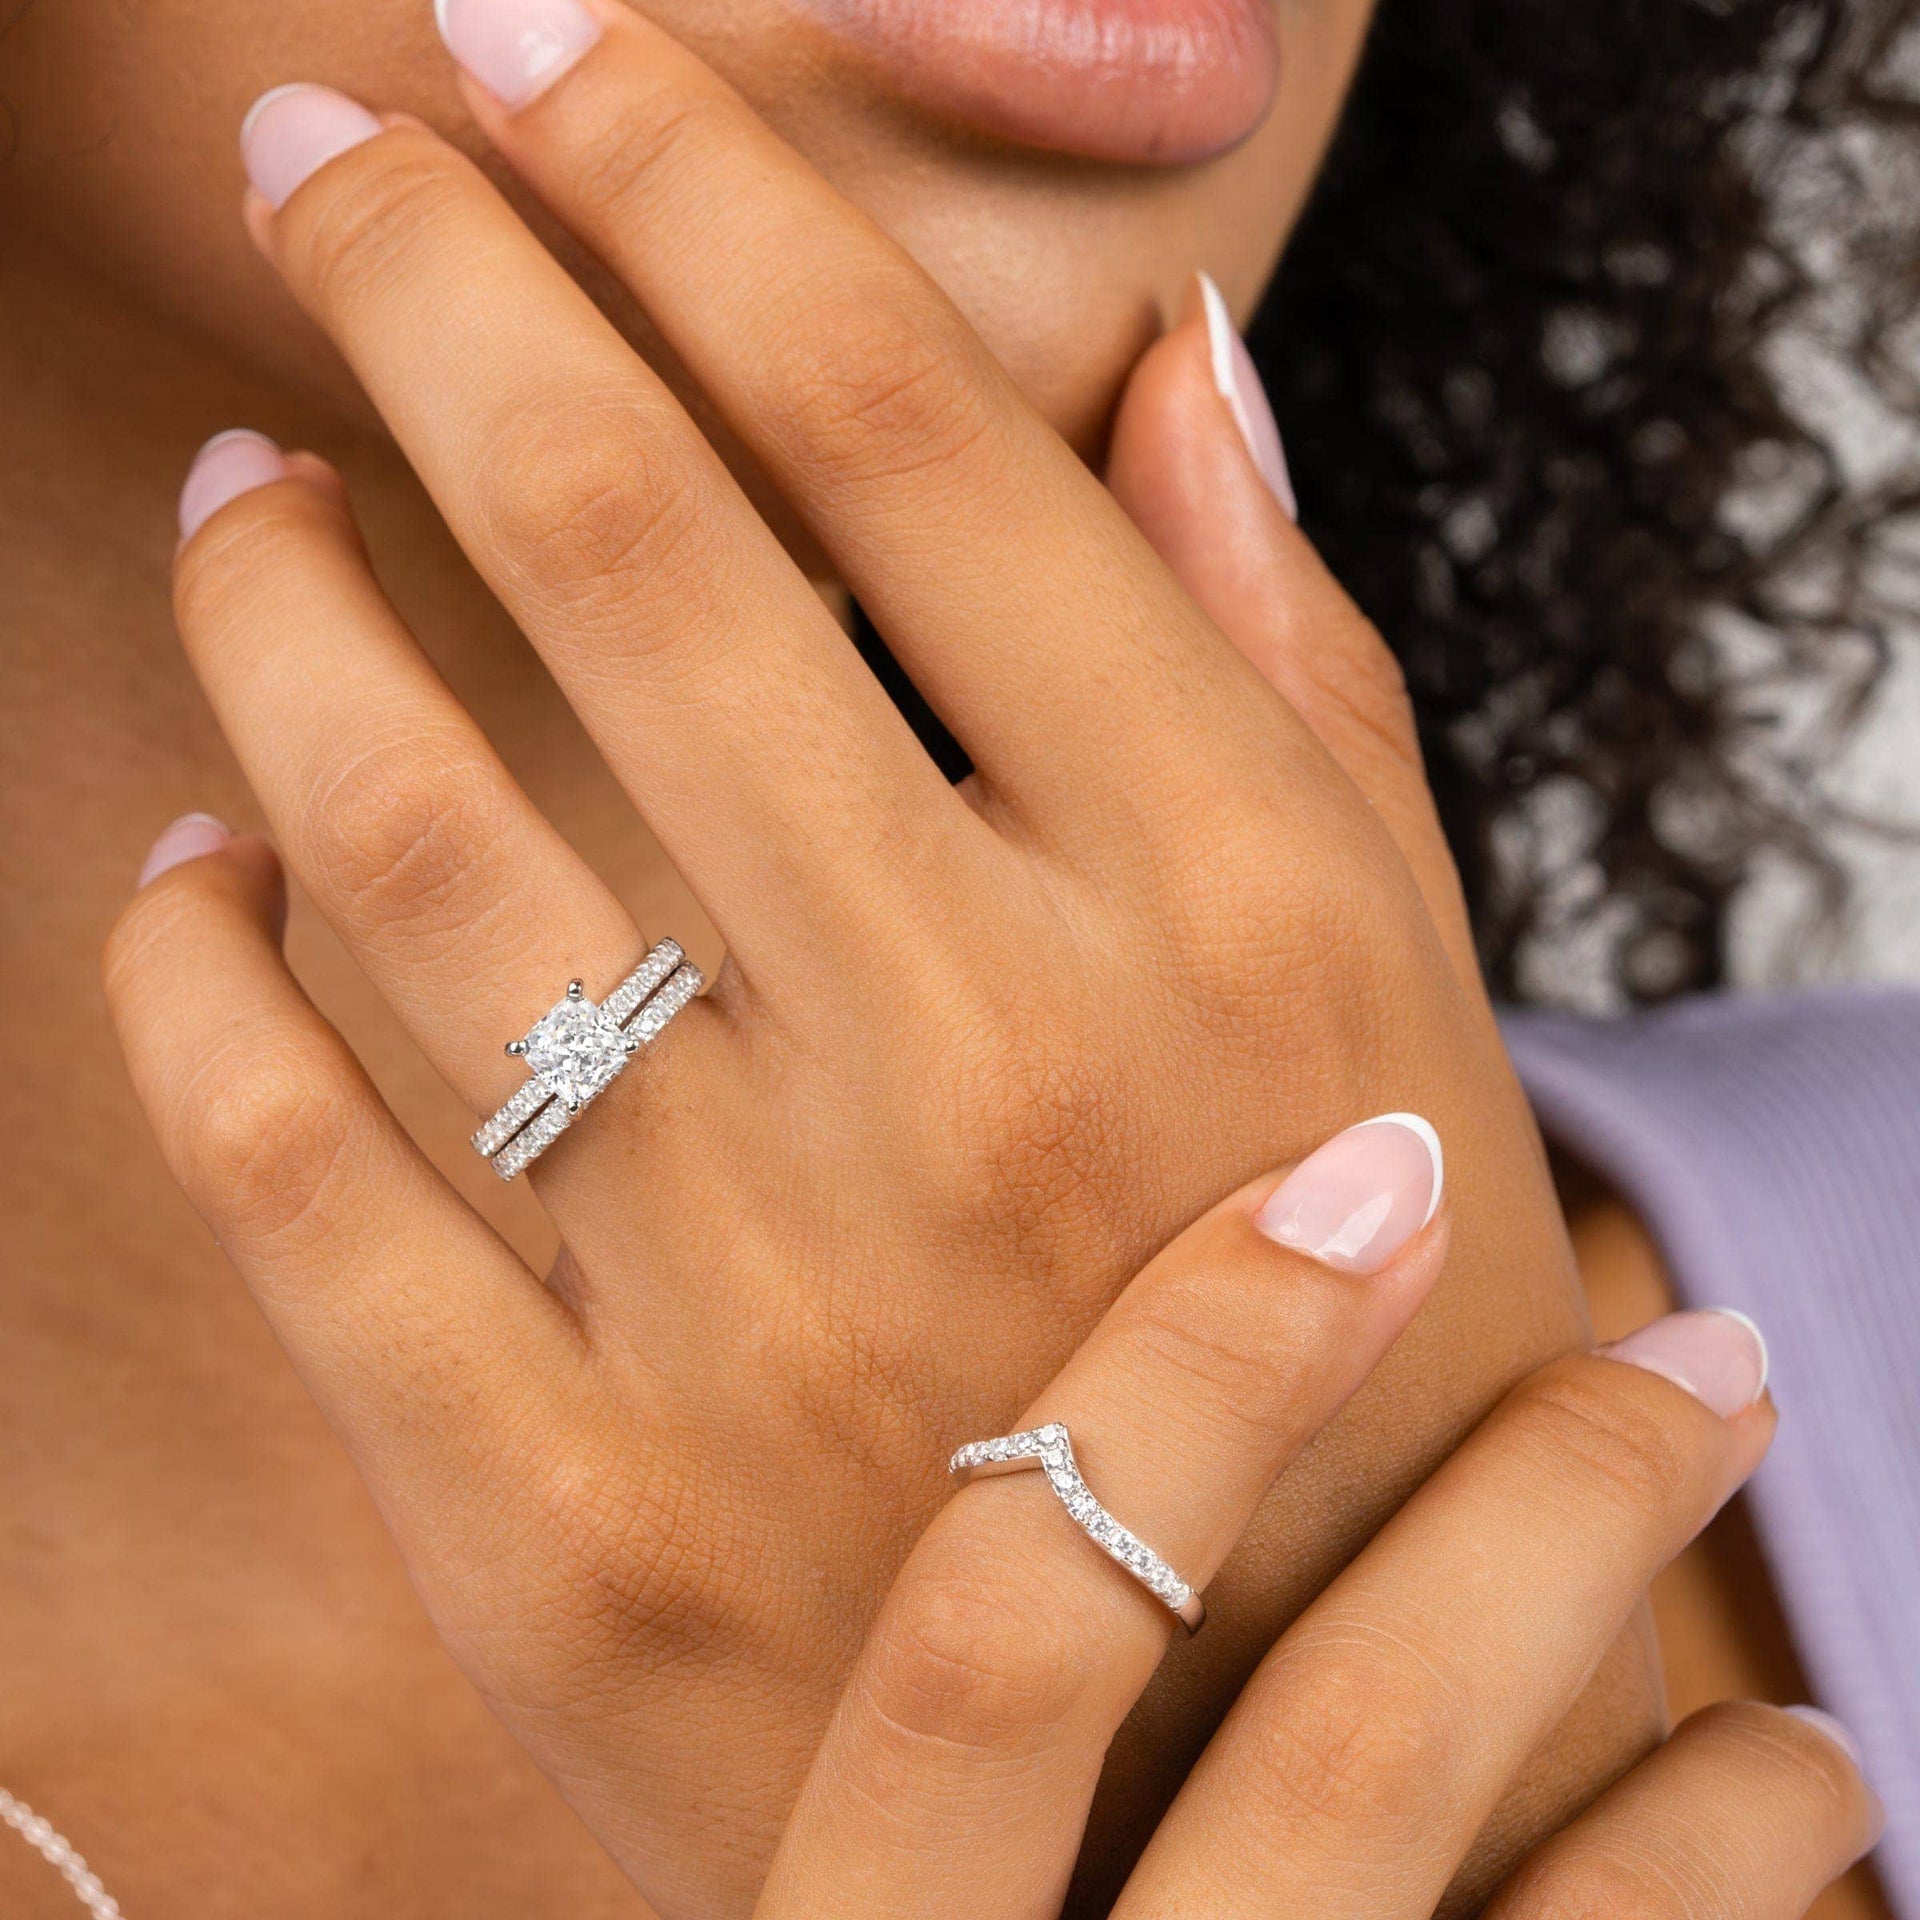 gorgeous silver wedding ring set on female hand